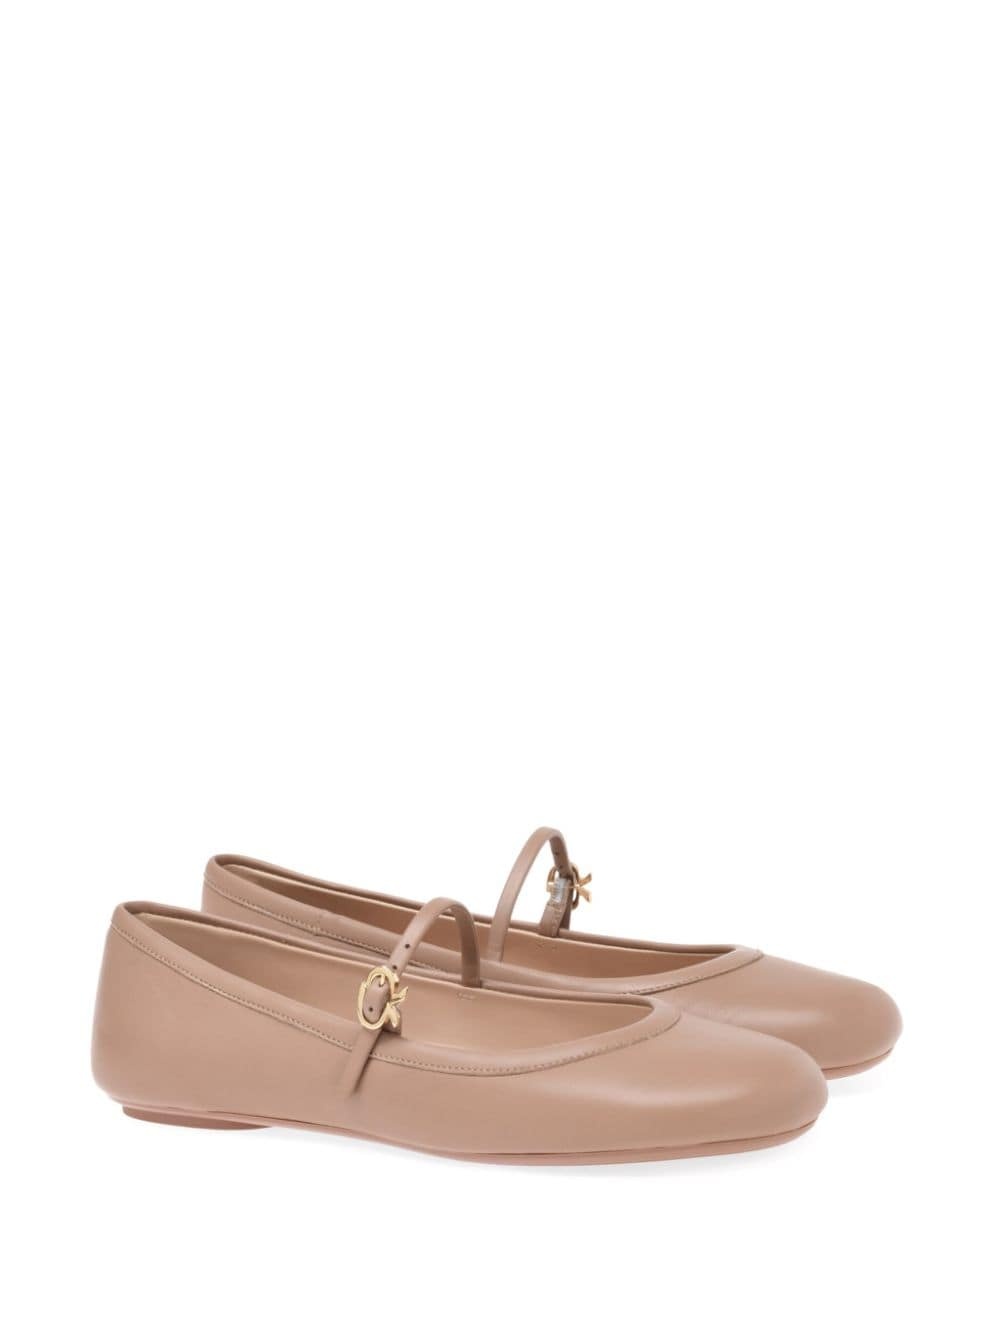 Carla leather ballerina shoes - 2